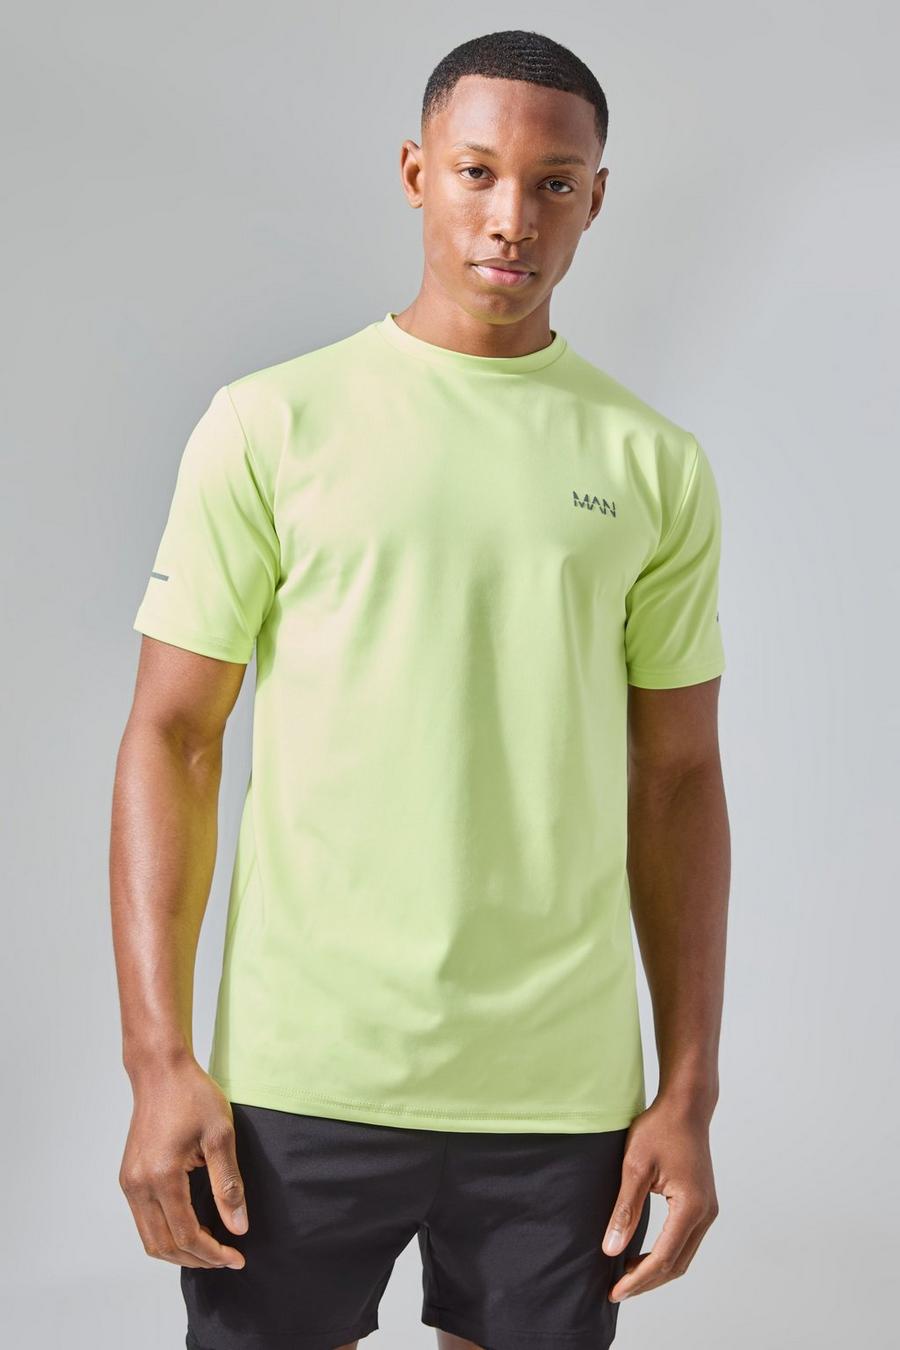 Green Man Active Performance T-shirt